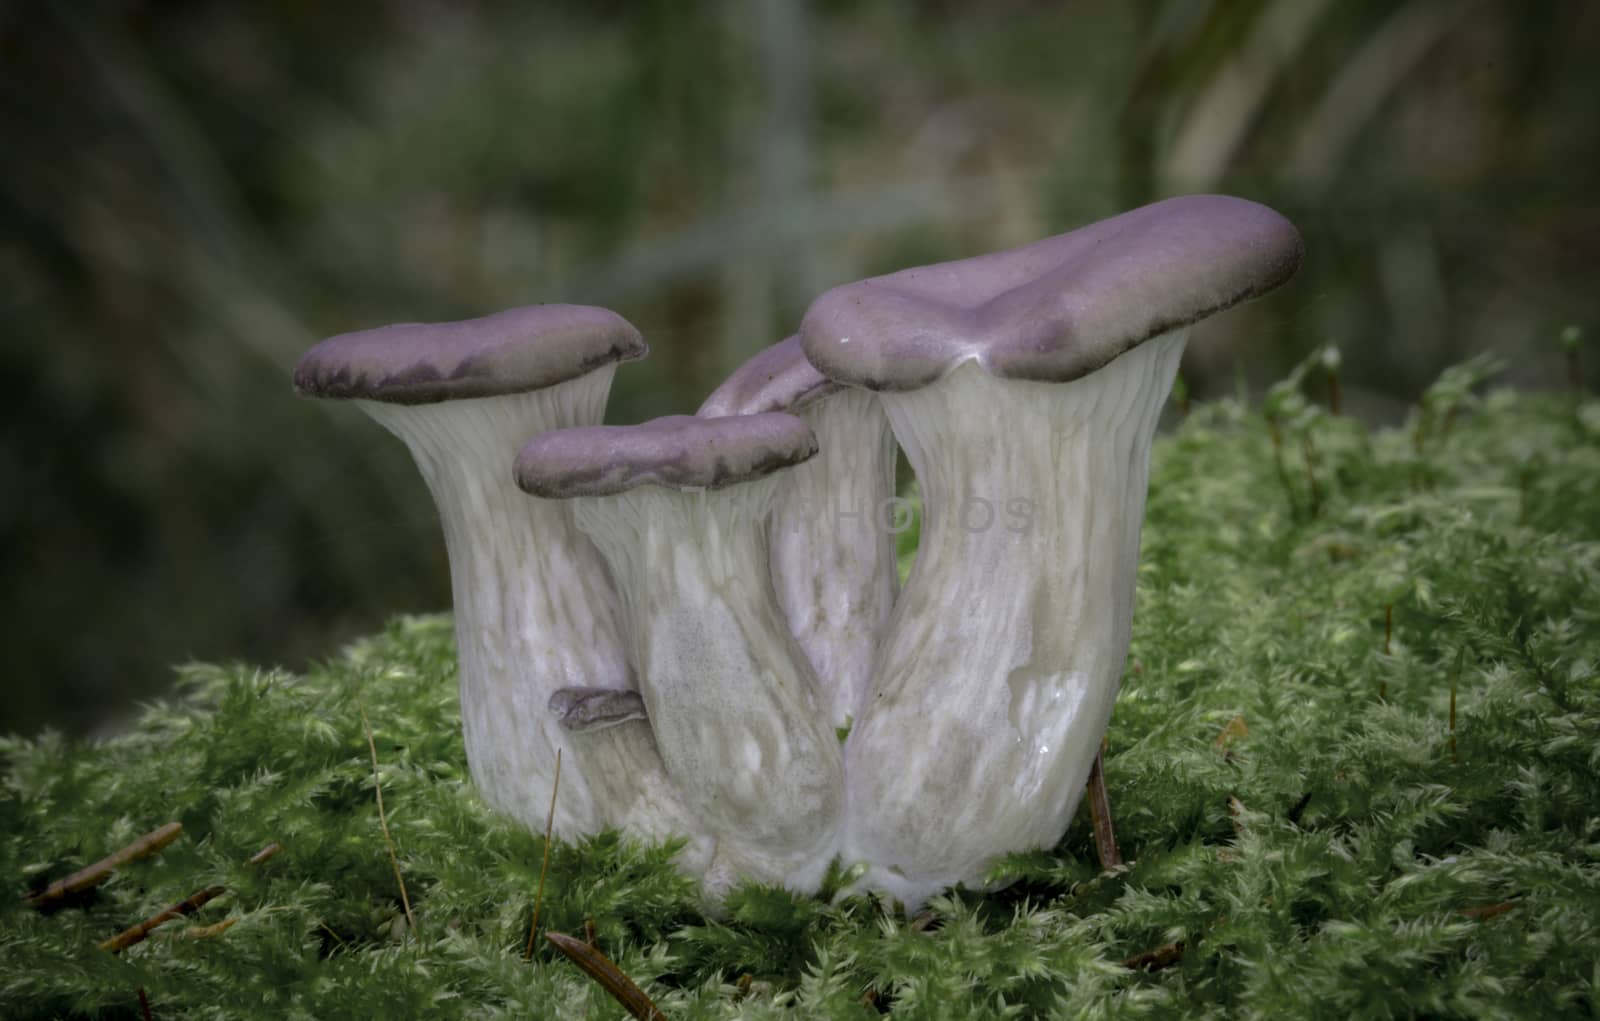 The Oyster Mushrooms in Pine Forest  -  Pleurotus sp. by gstalker